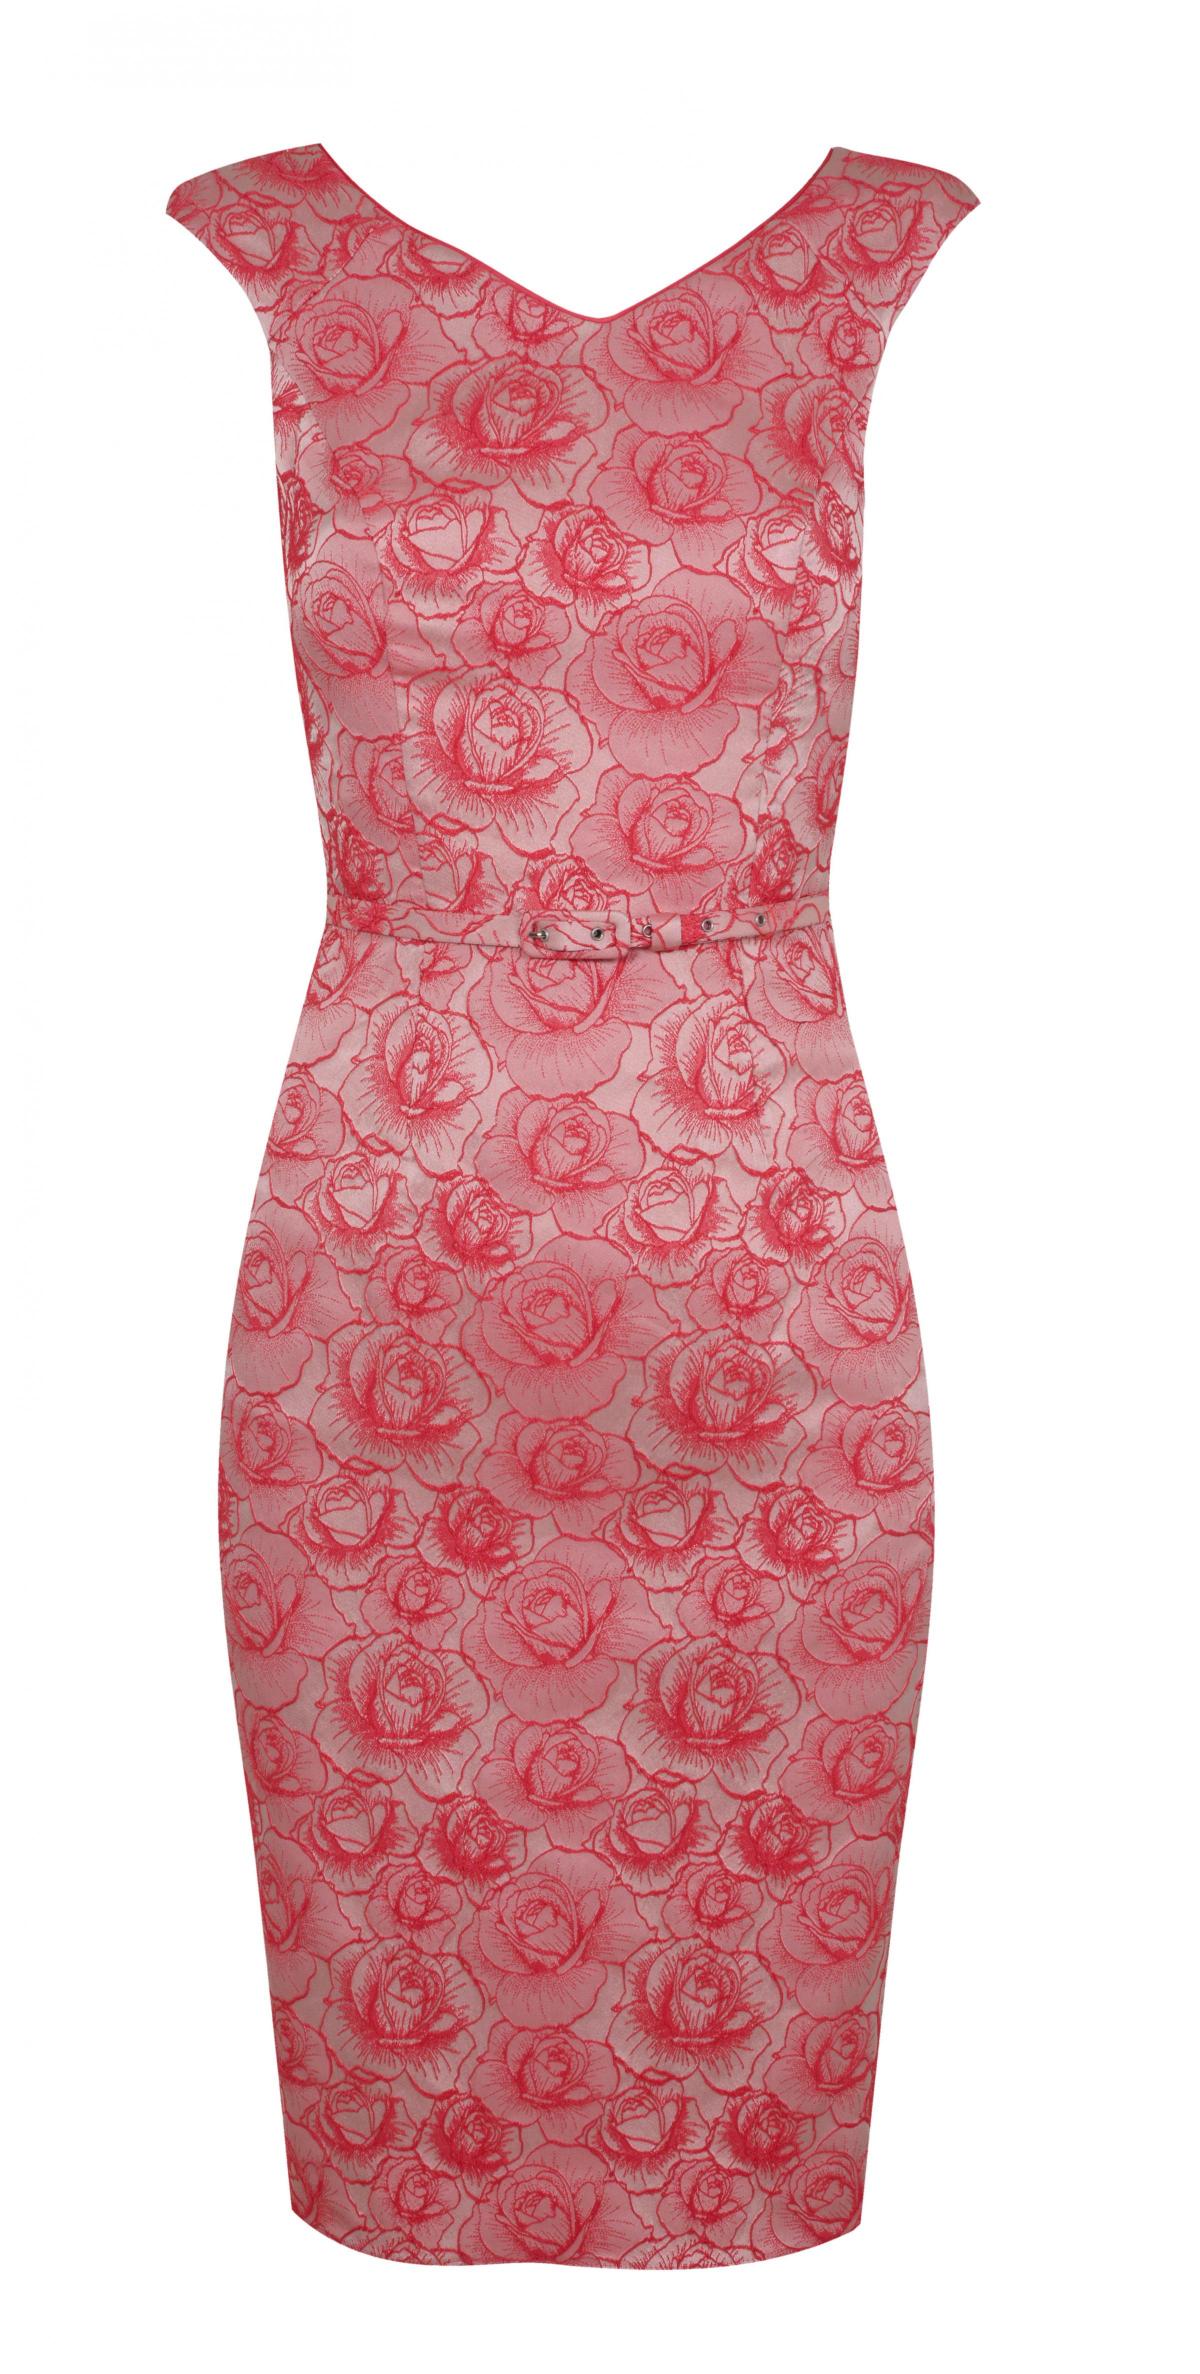 BHS, pink rose jacquard dress, £55